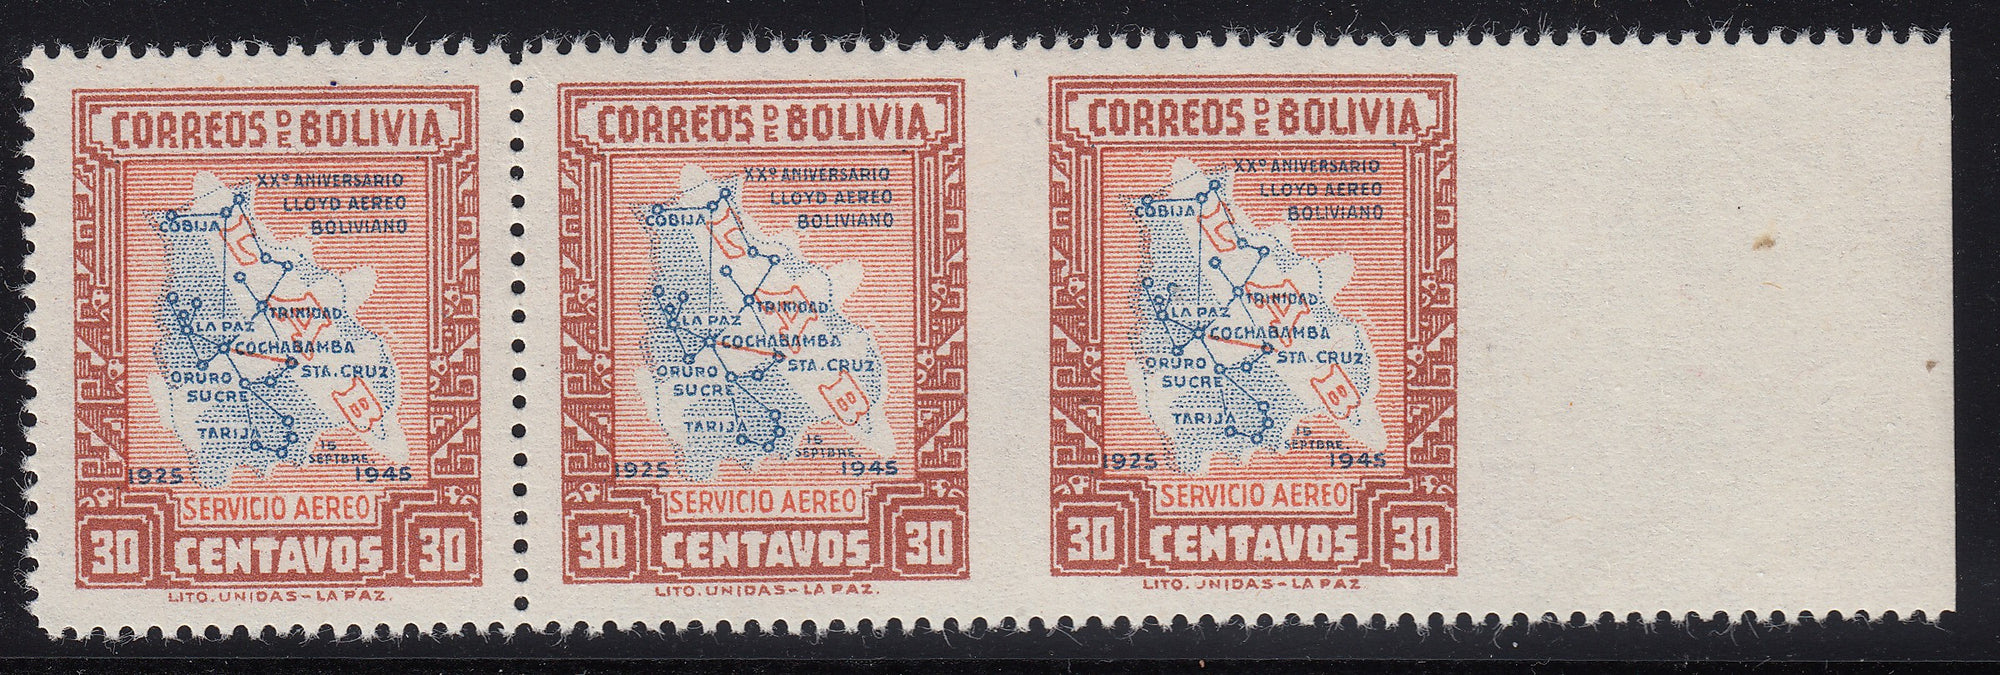 Bolivia 1946 30c Orange Brown Imperf Inbetween Strip of 3 MNH. Scott C106 var